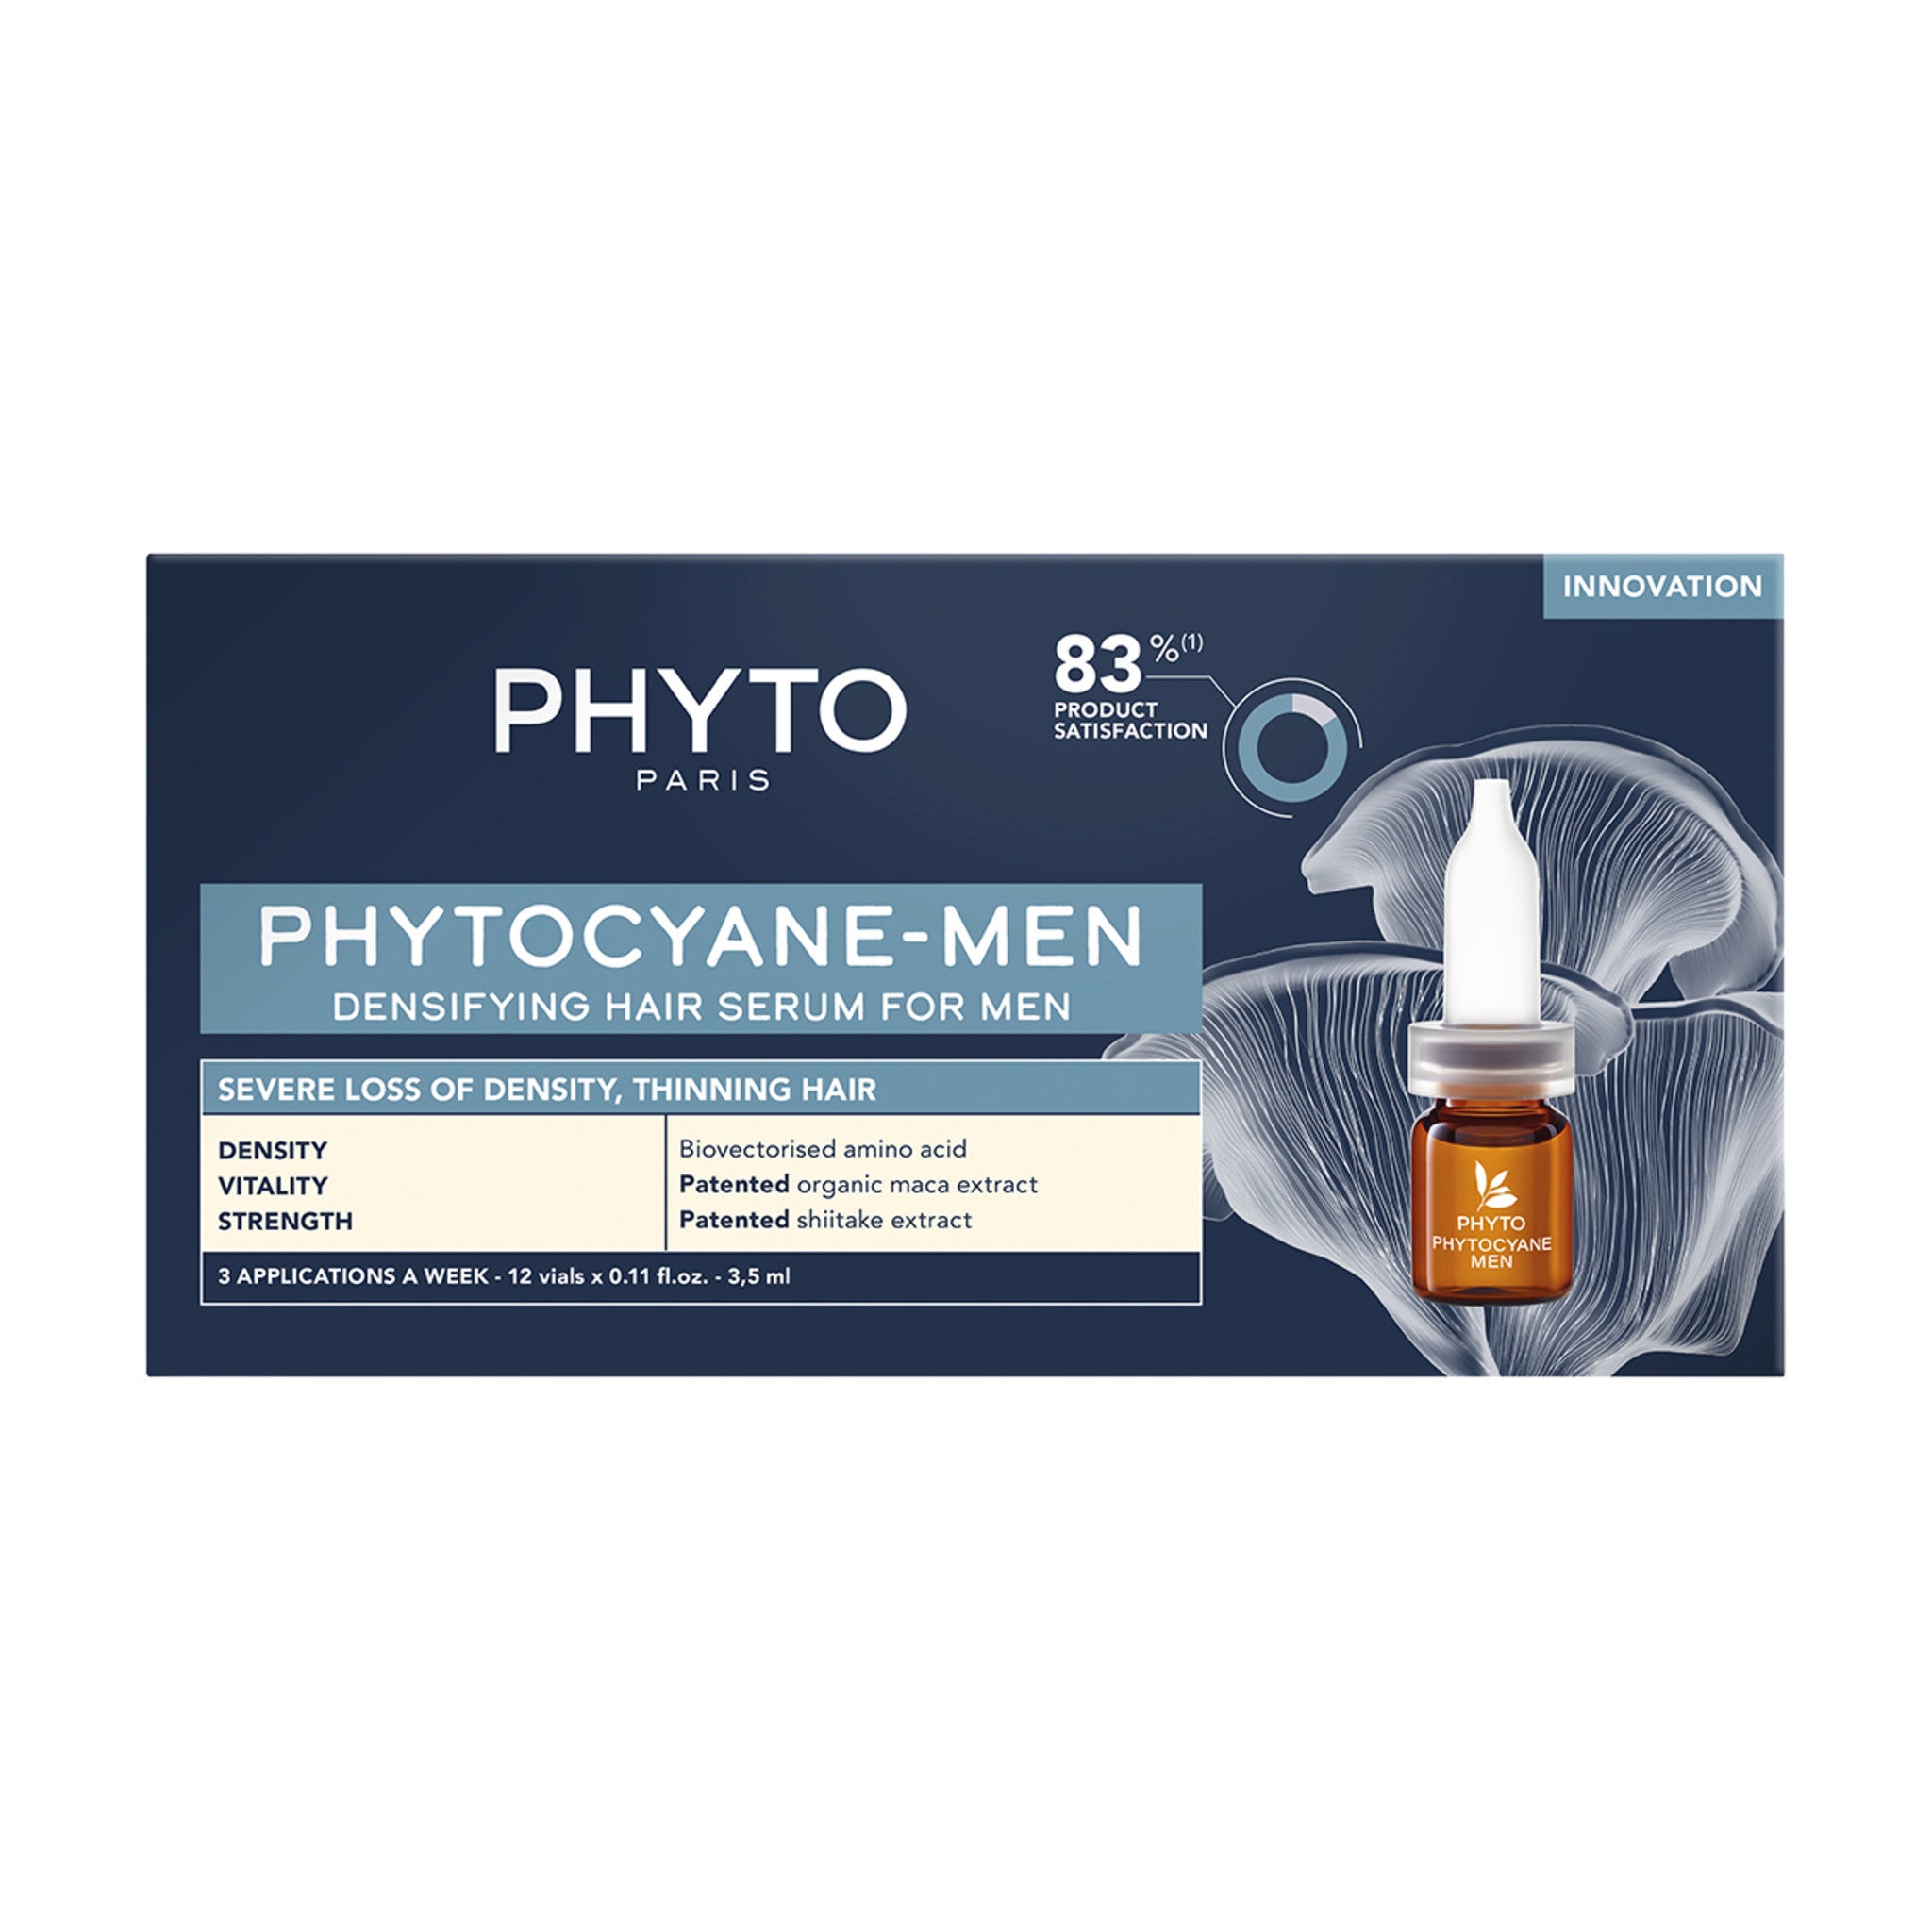 Phyto Phytocyane Anti Hair Loss Treatment for Men main image.